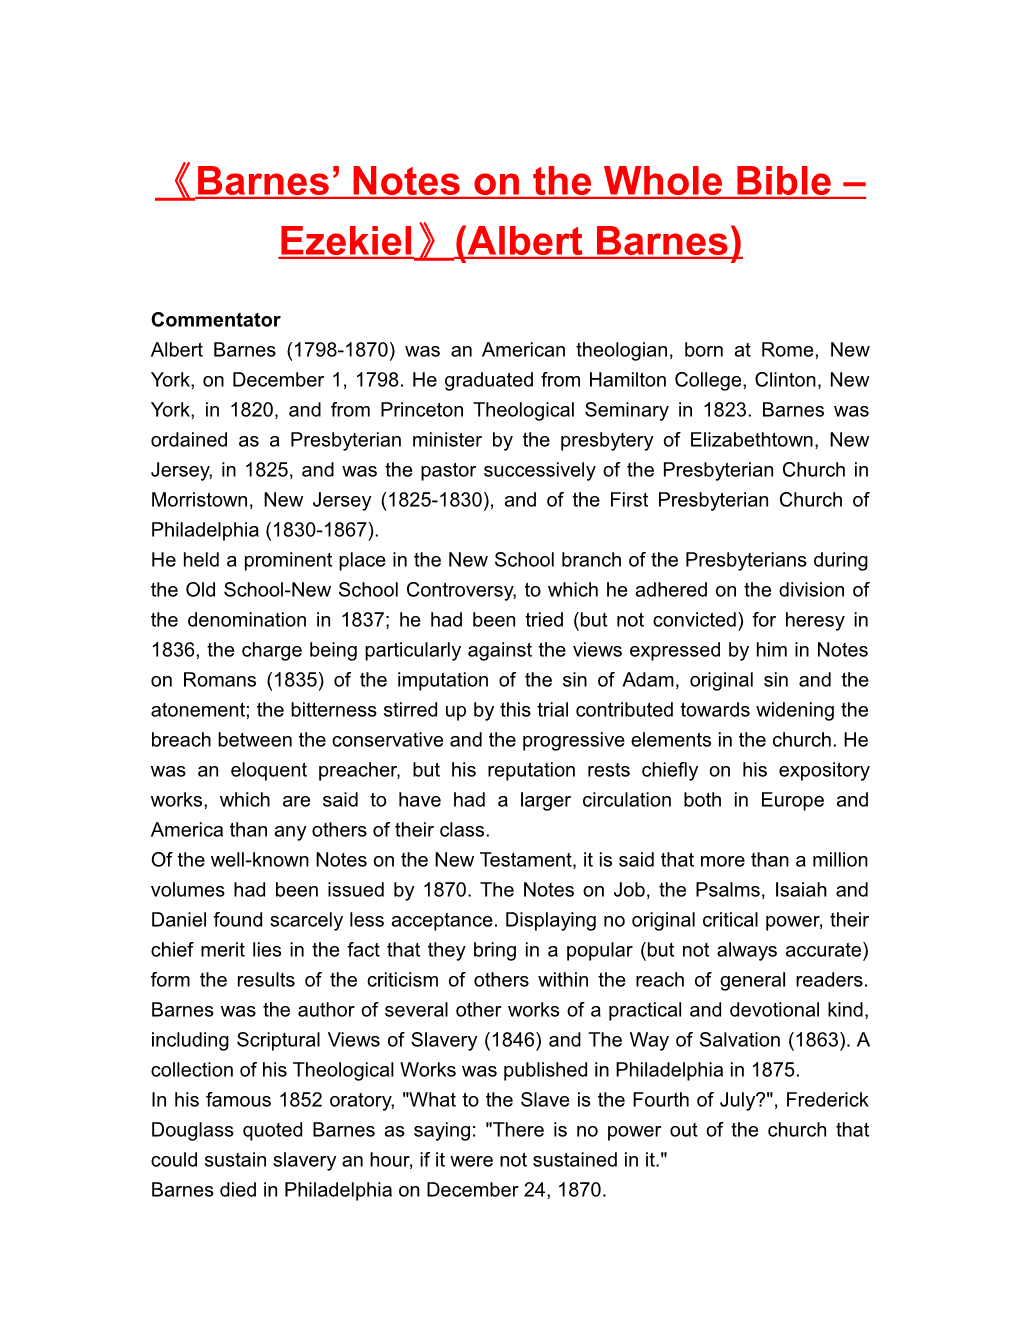 Barnes Notes on the Whole Bible Ezekiel (Albert Barnes)